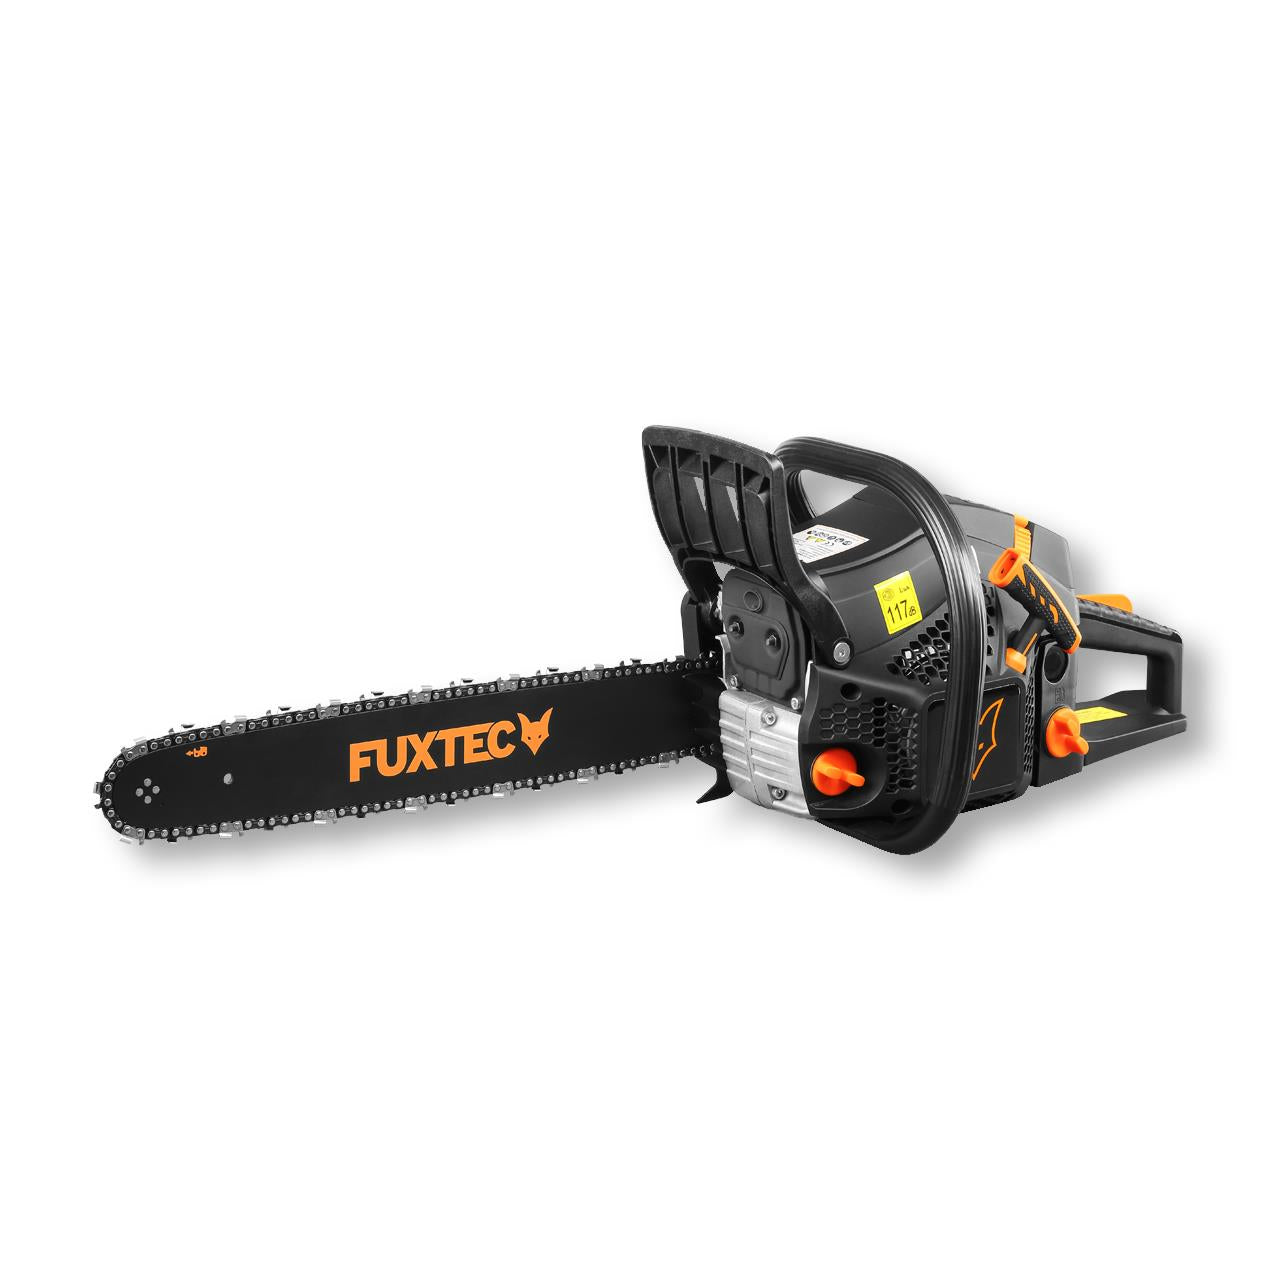 Petrol FUXTEC chainsaw – The FX-KS255 Black Edition